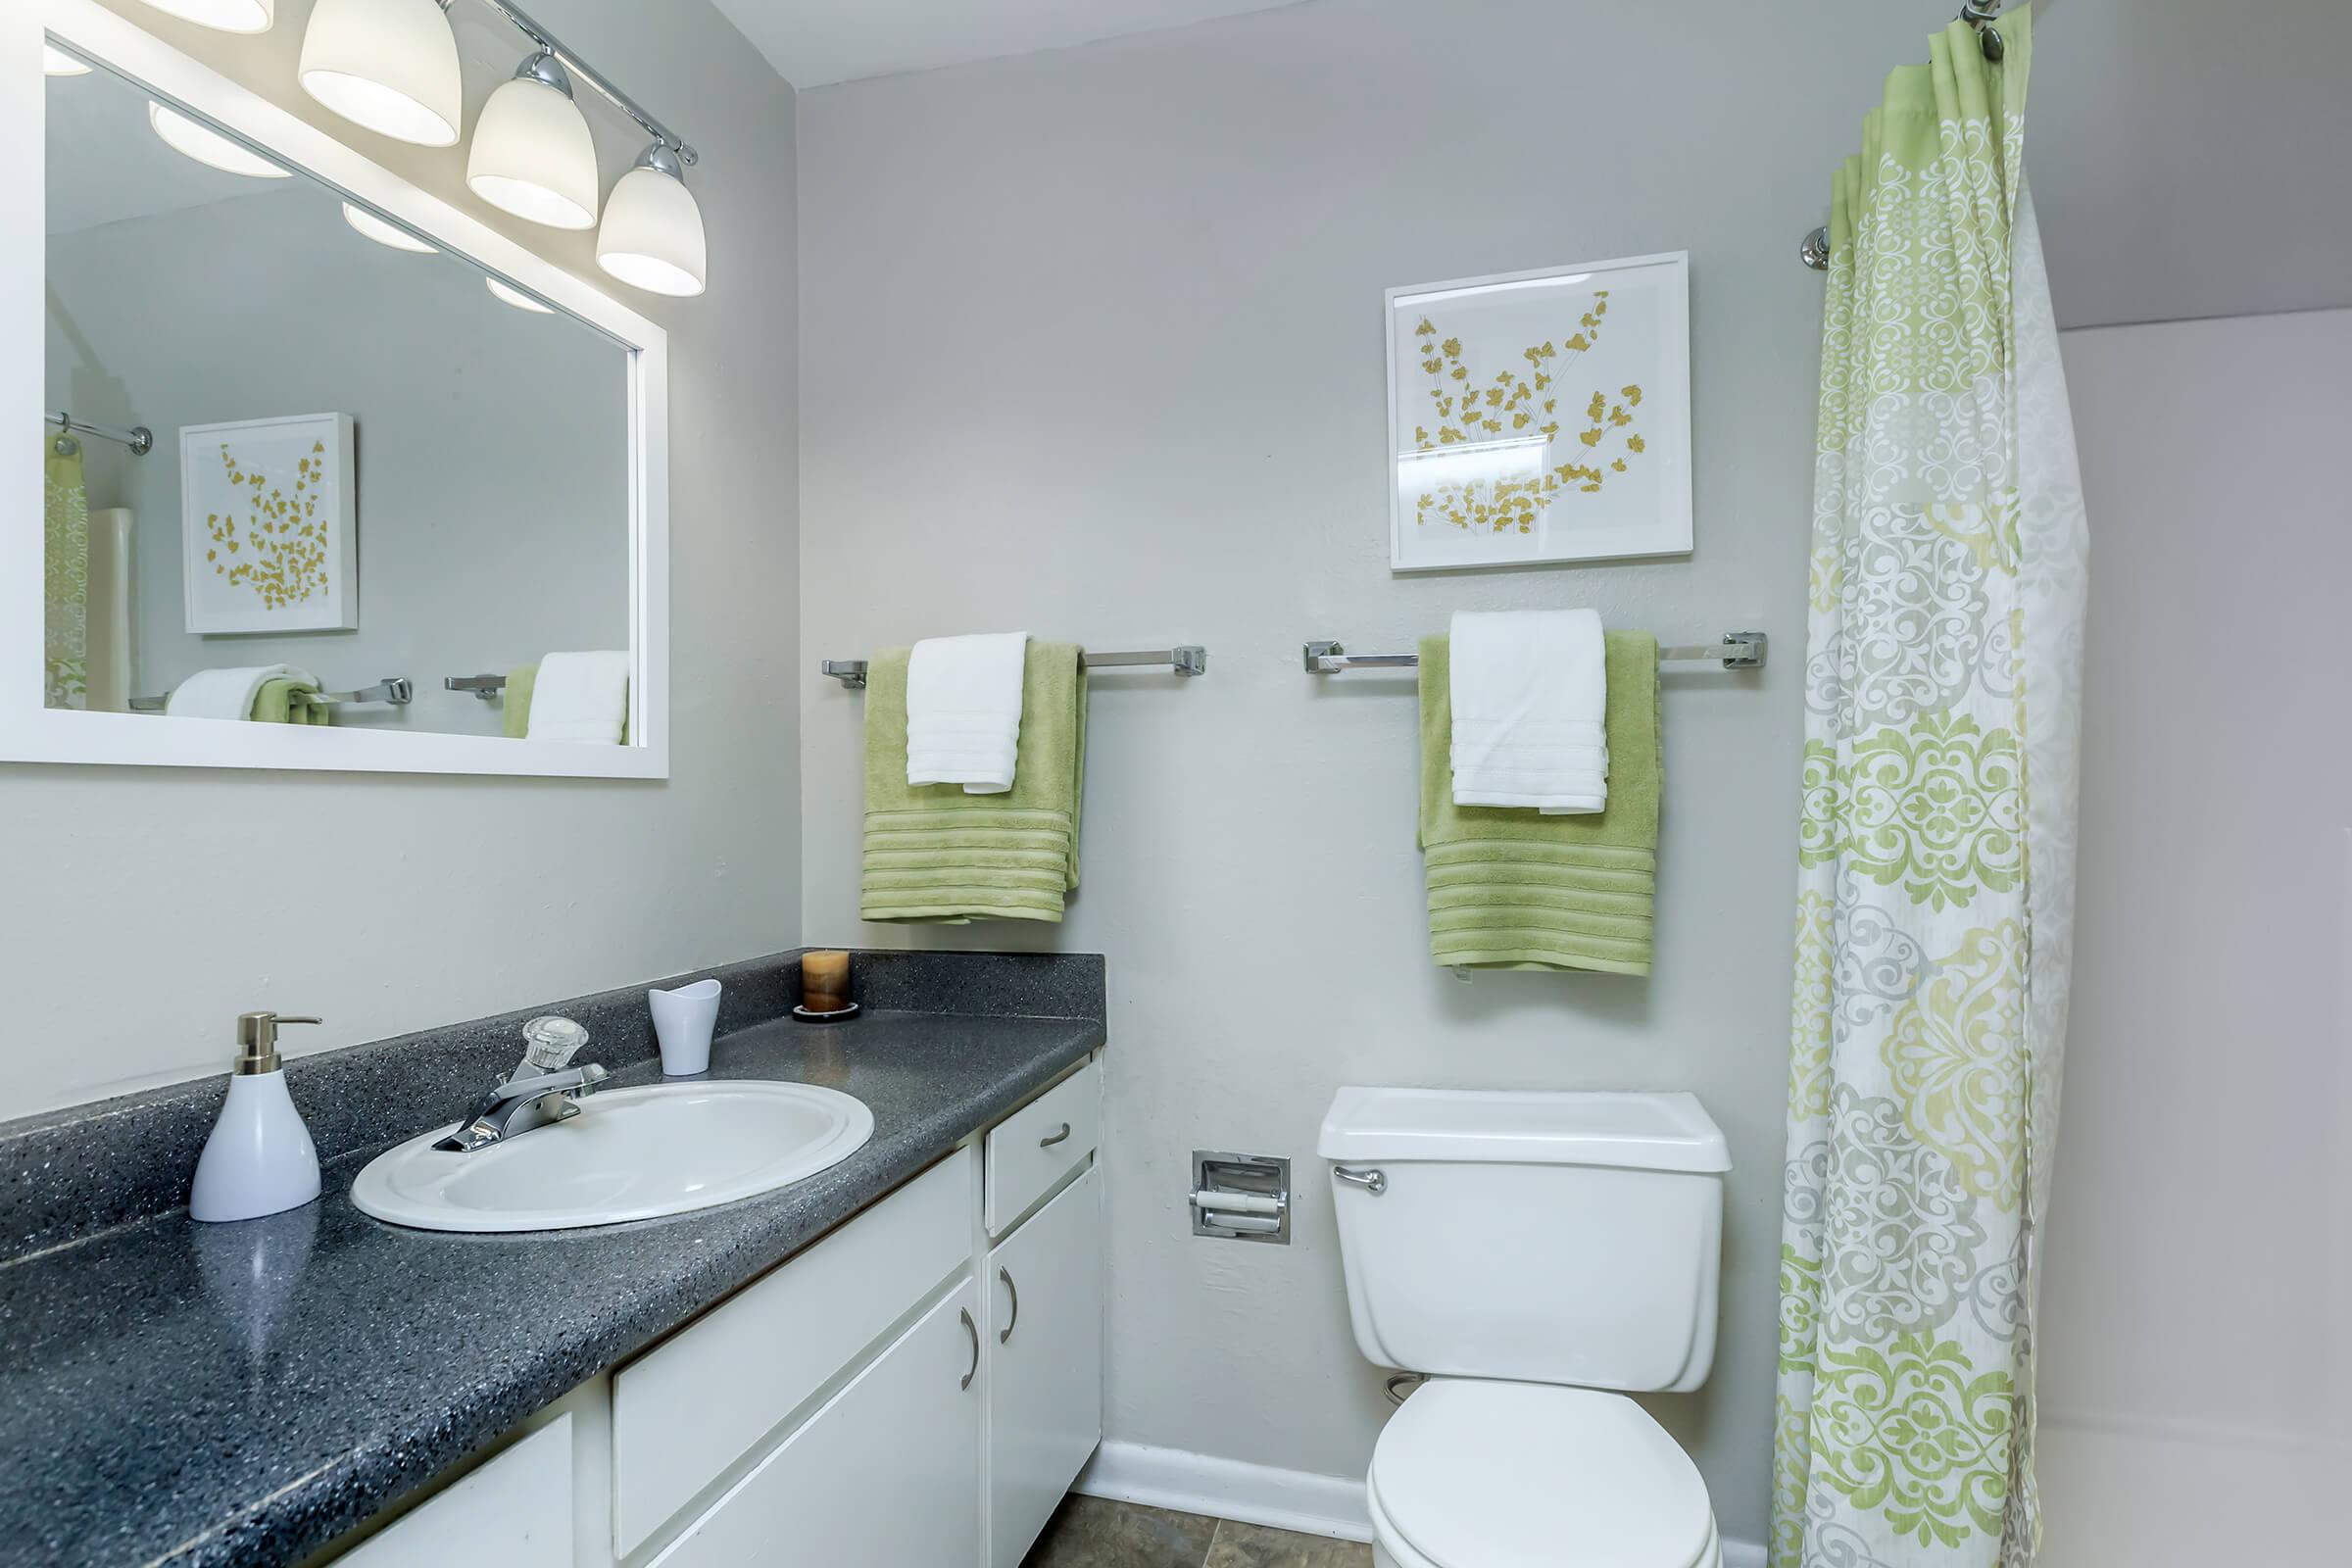 Bathroom - The Ivy Apartments - Greenville - South Carolina